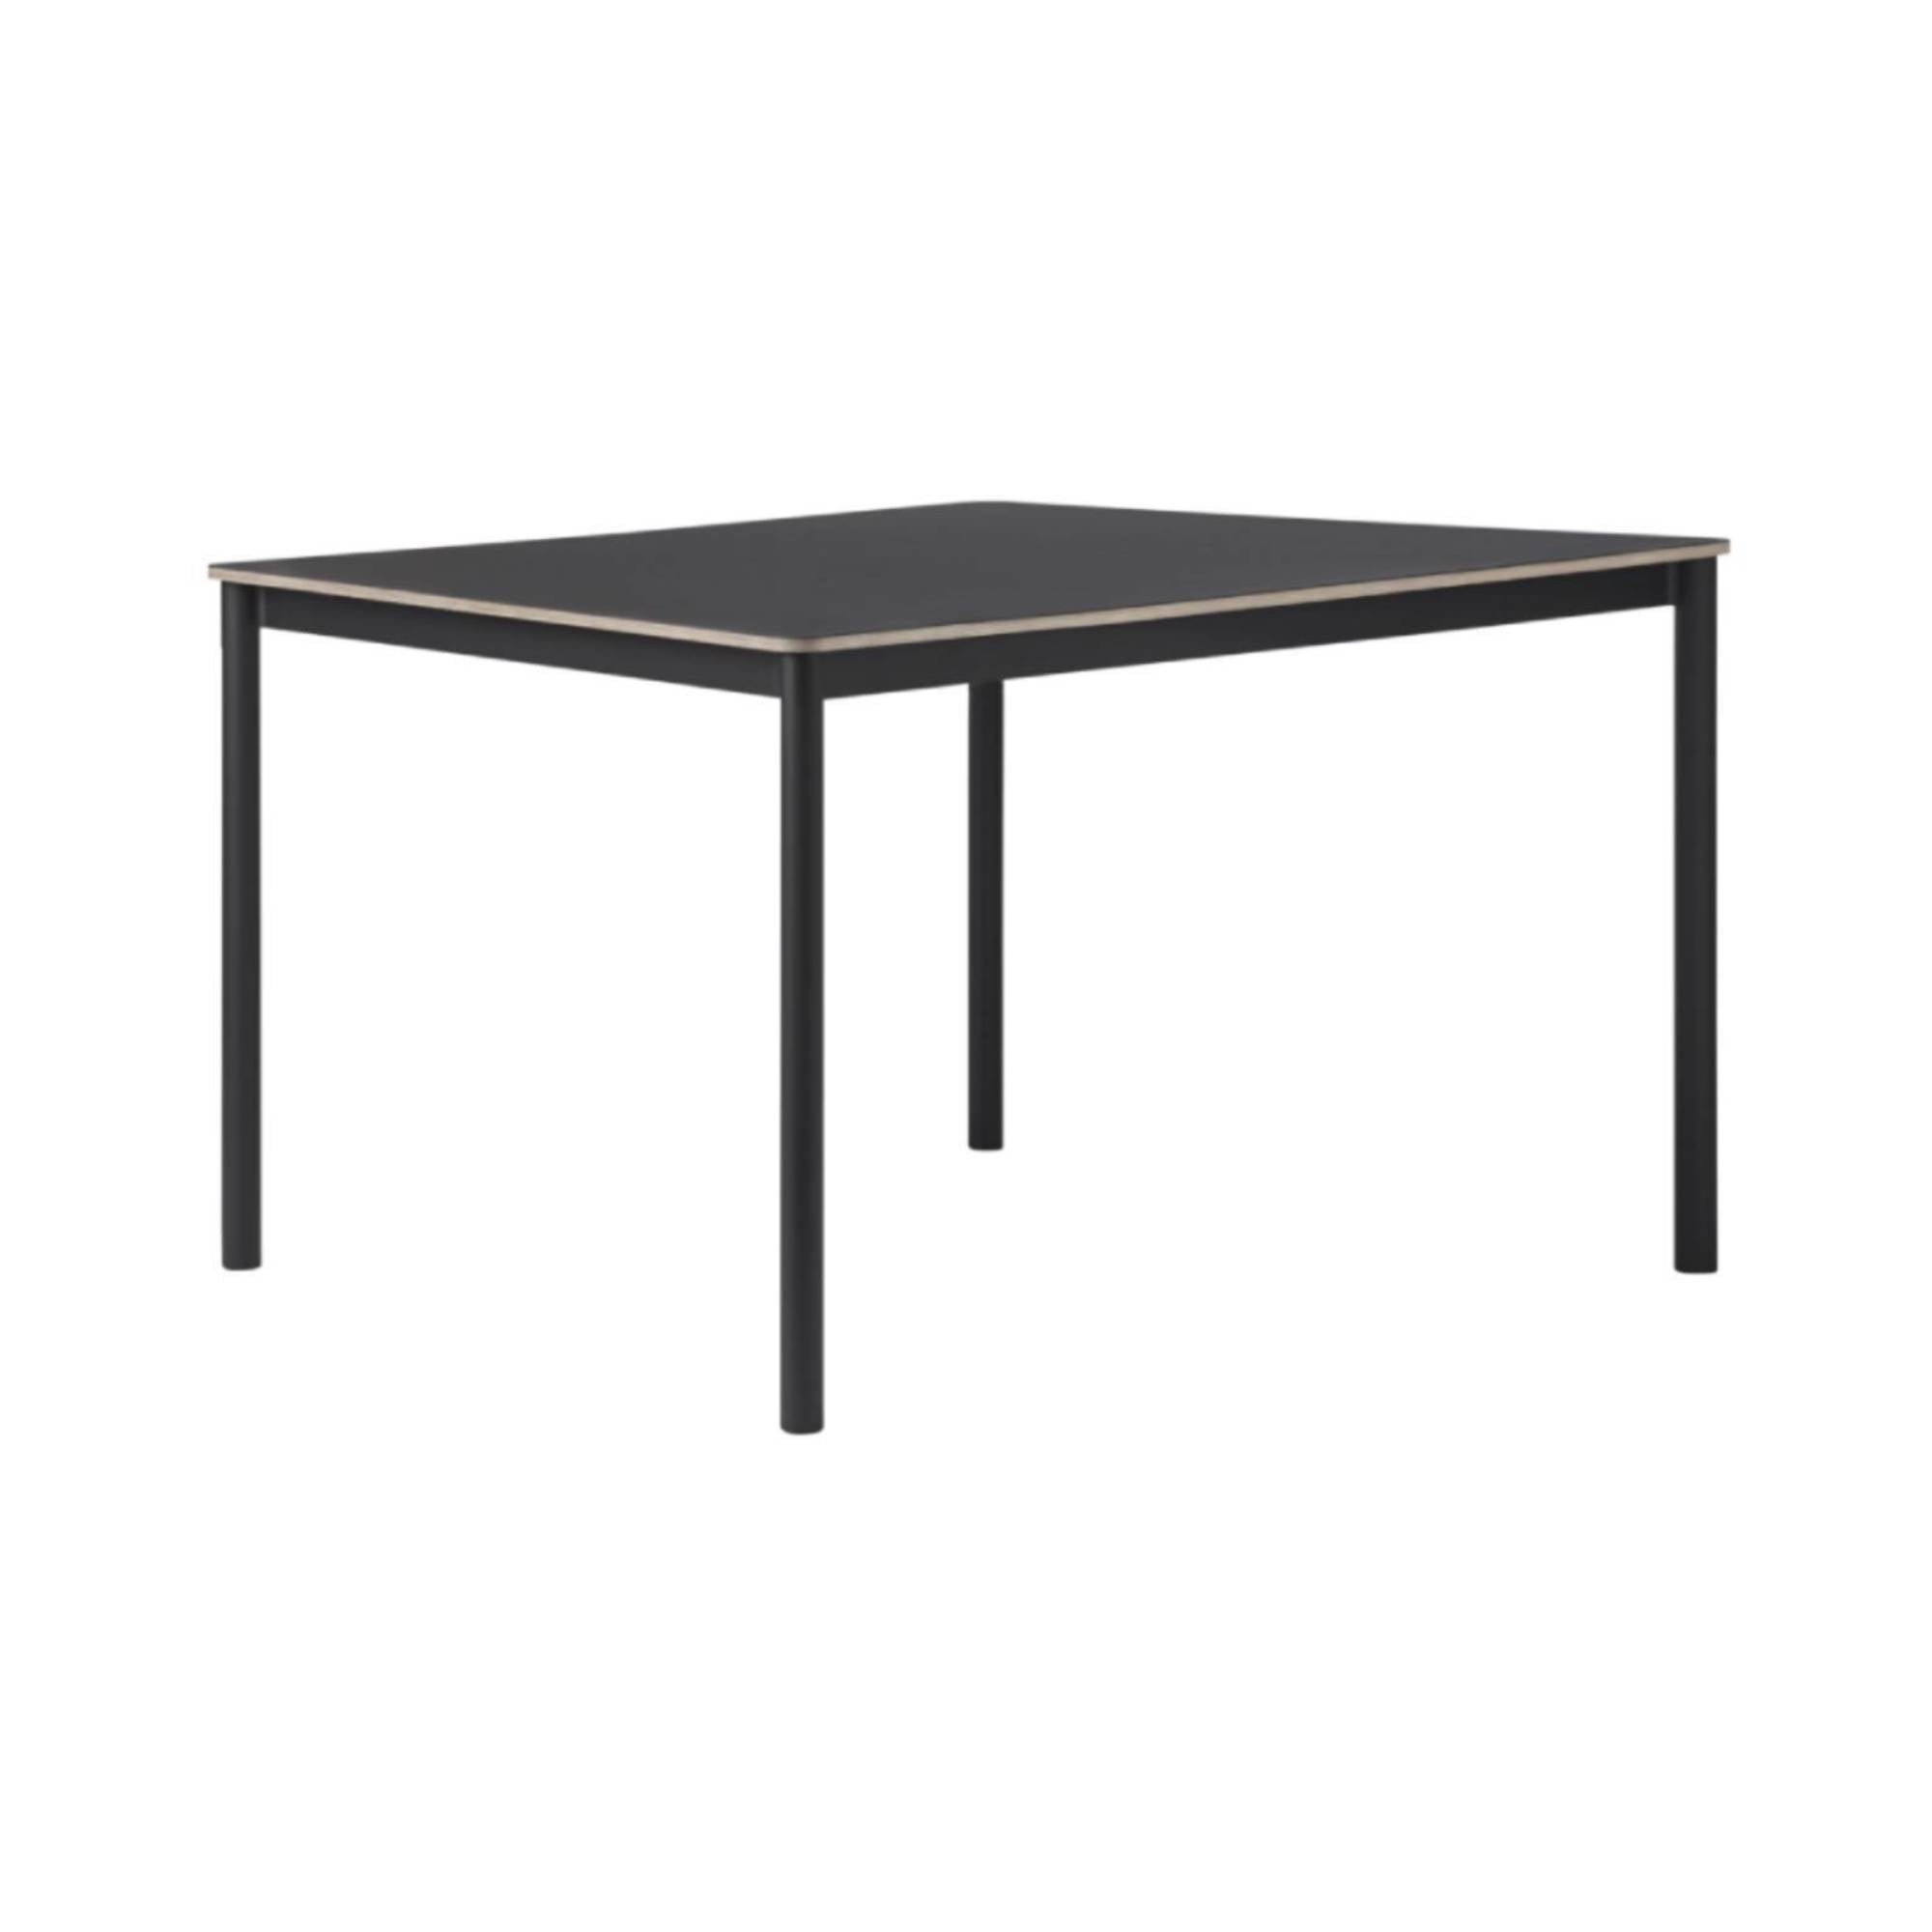 Base Table: Small + Black Linoleum + Plywood Edge + Black